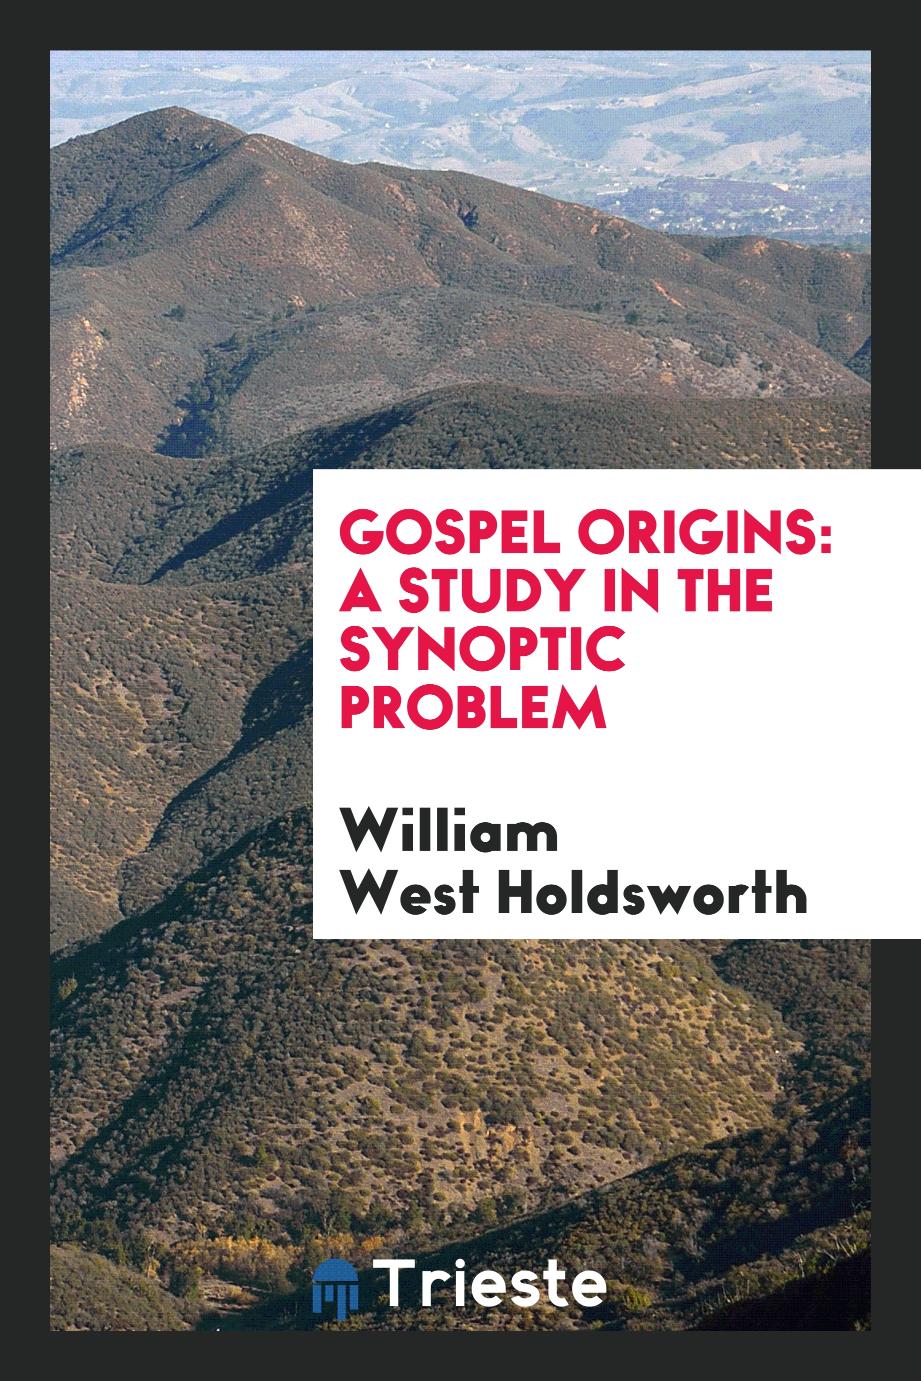 Gospel origins: a study in the Synoptic problem